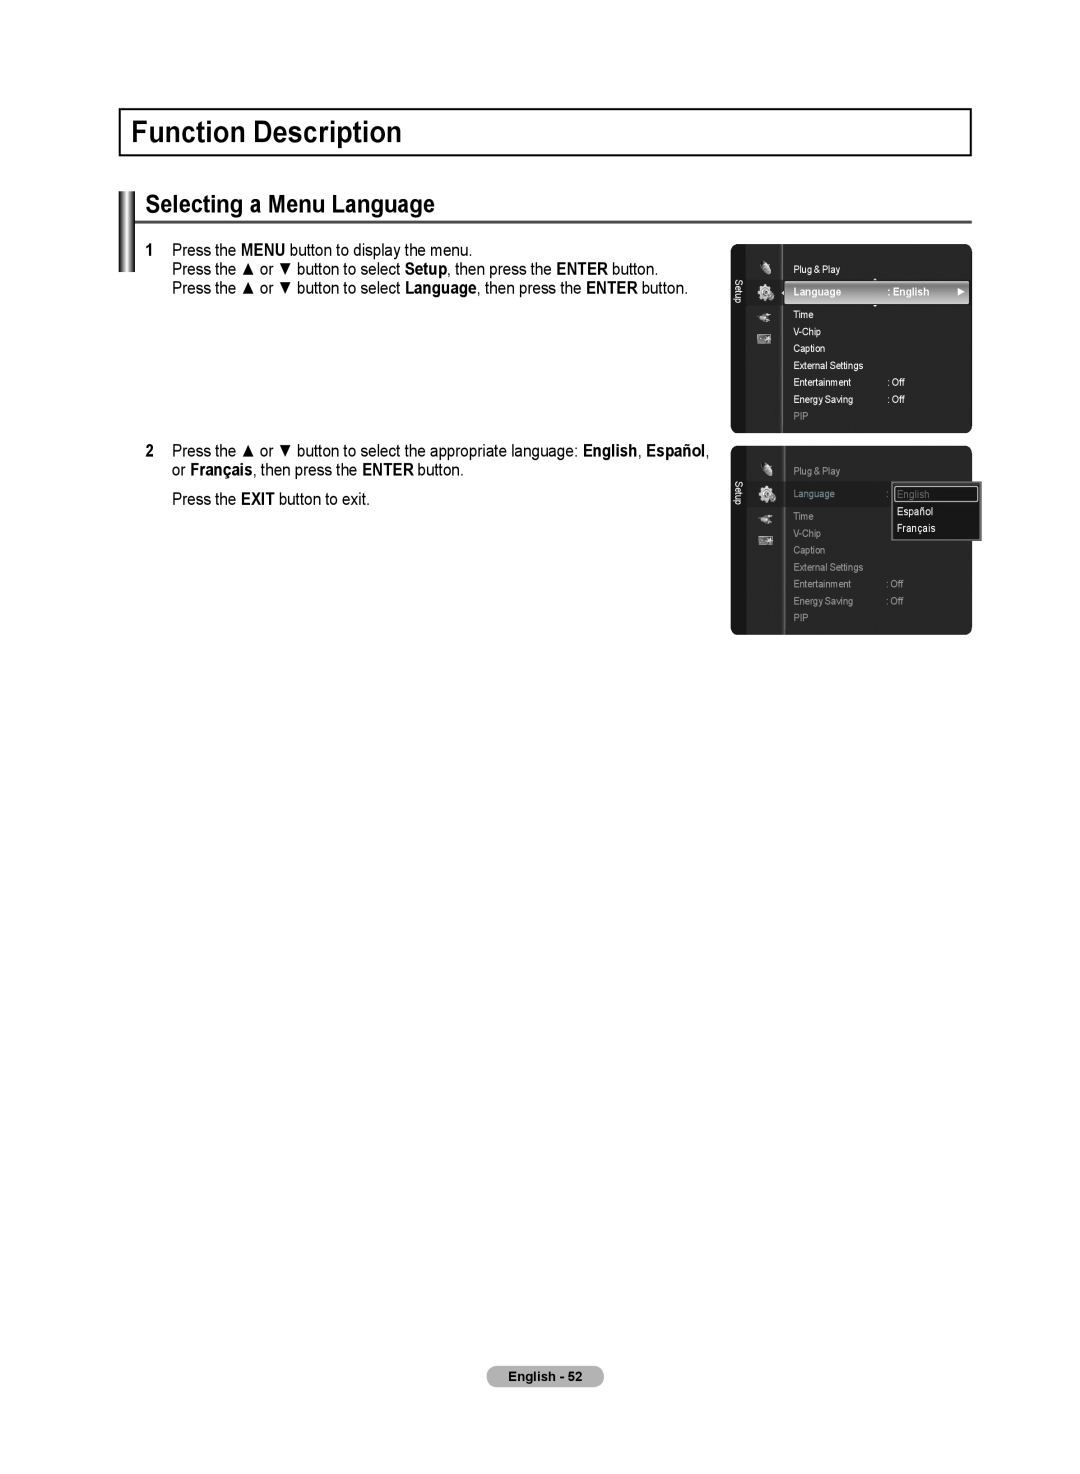 Samsung 510 user manual Function Description, Selecting a Menu Language 